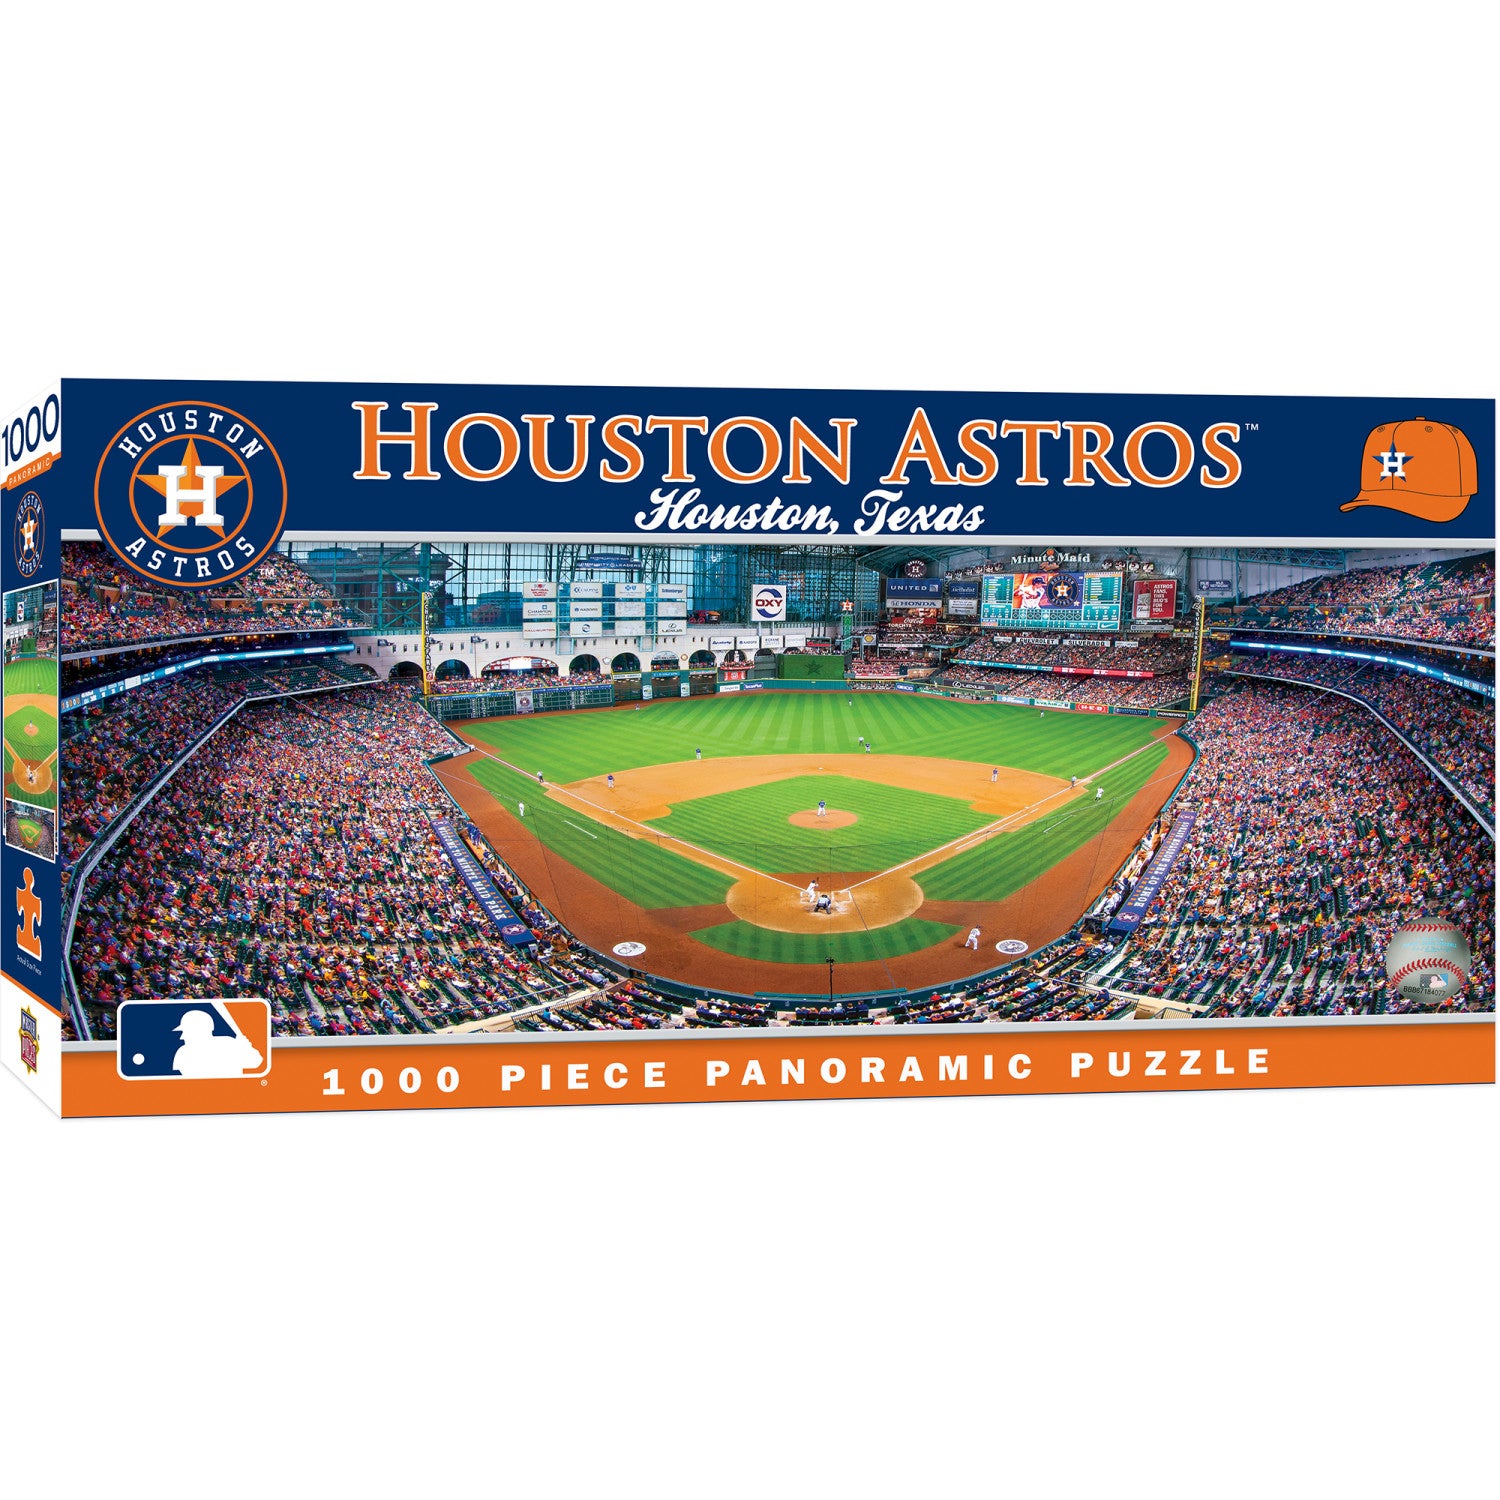 Houston Astros - 1000 Piece Panoramic Jigsaw Puzzle